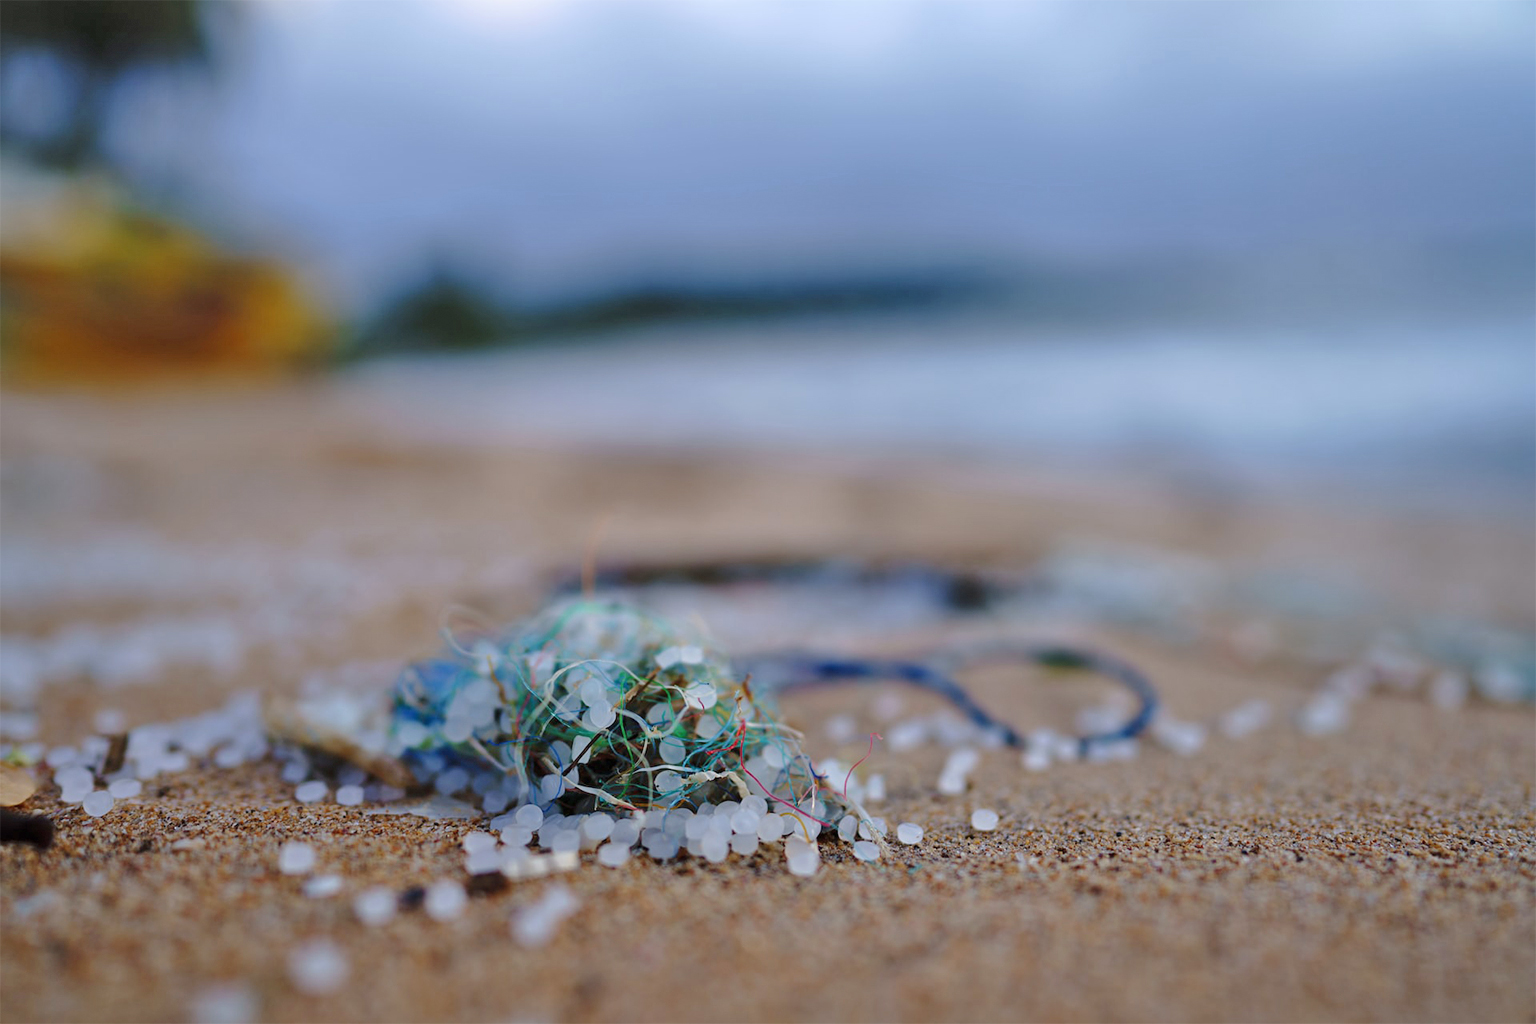 Plastic pellets on a beach.